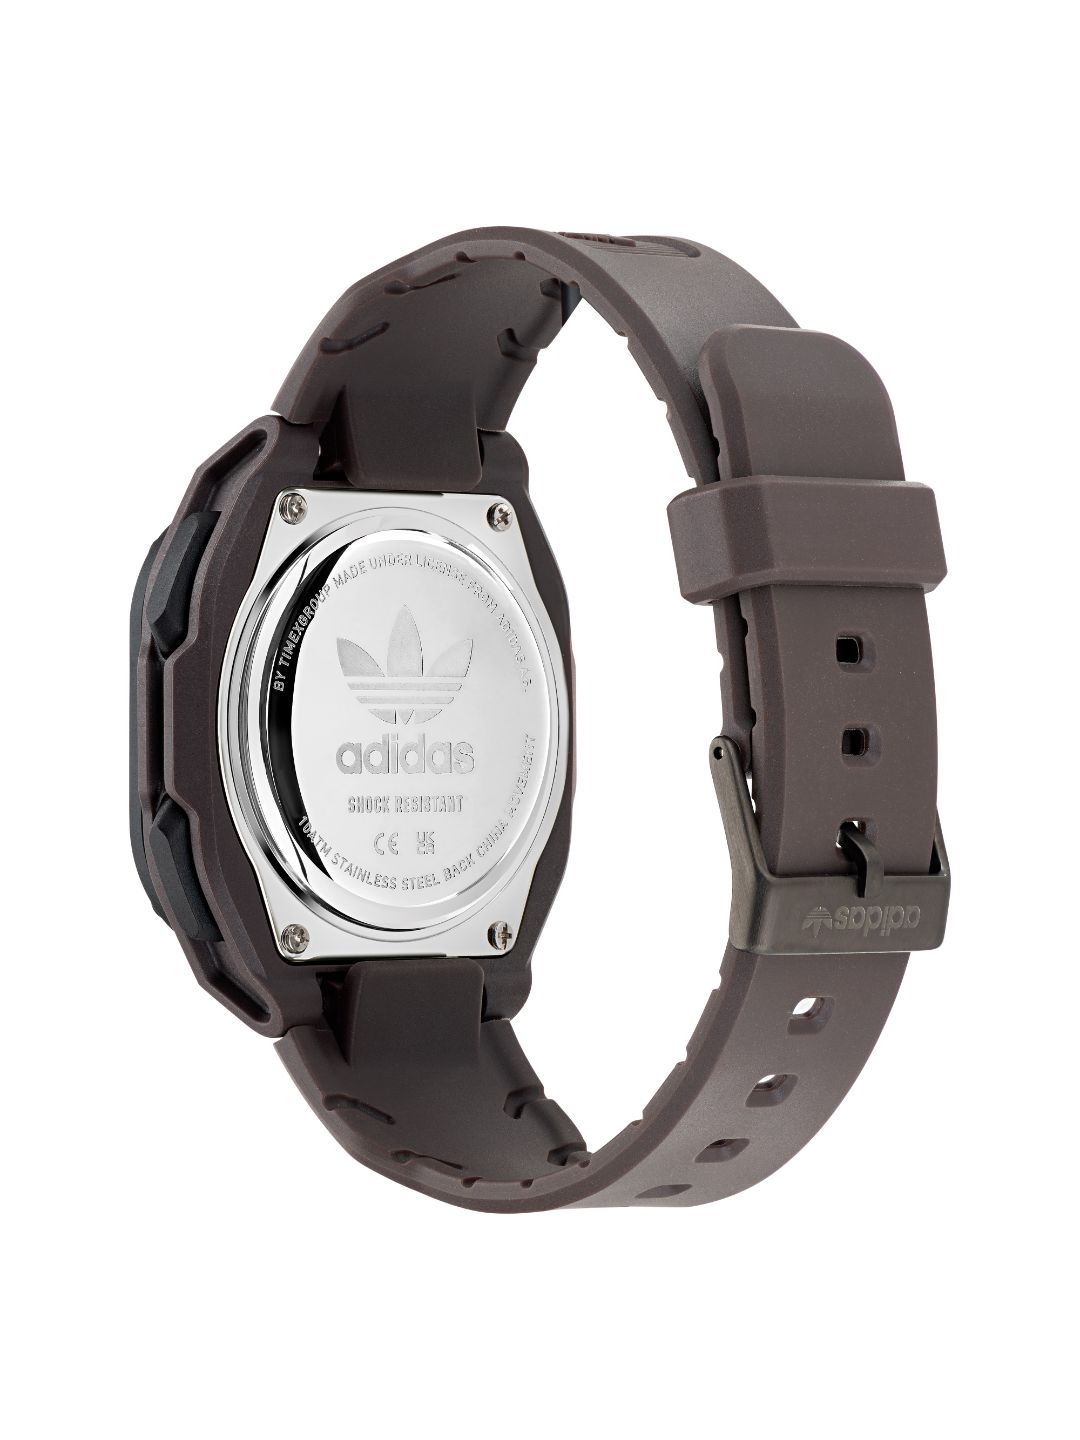 Adidas Originals Black Dial Unisex Watch - AOST22546